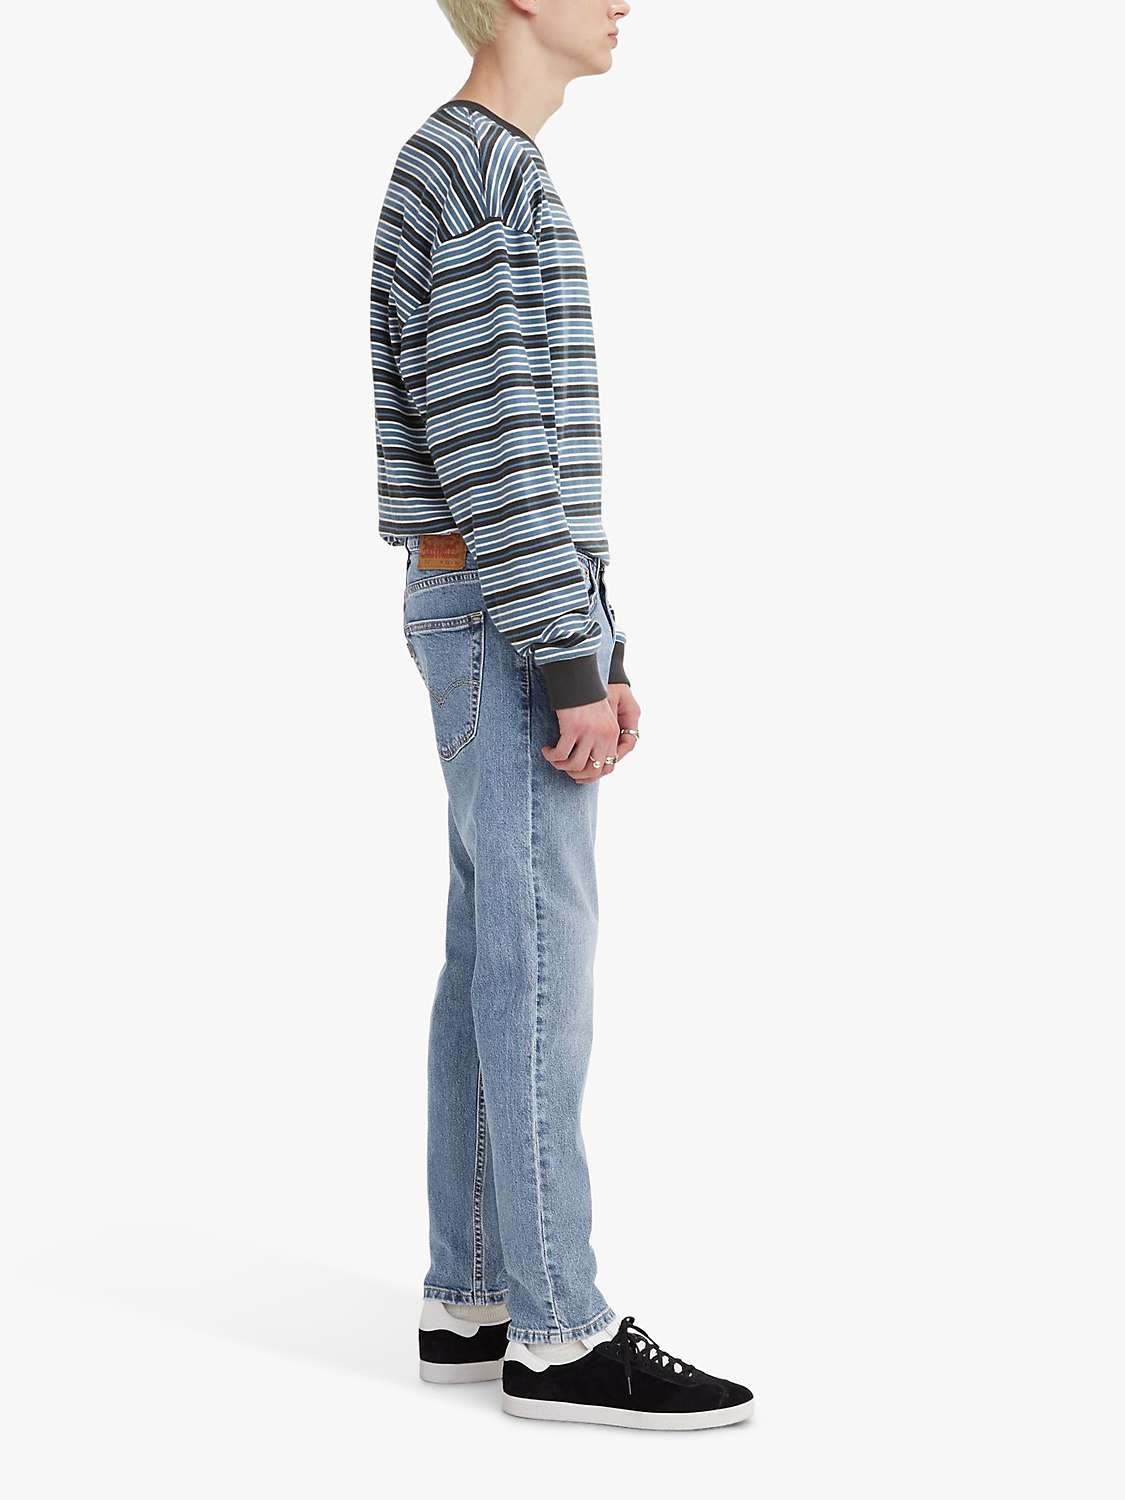 Buy Levi's 512 Slim Tapered Jeans, Z6989 Online at johnlewis.com